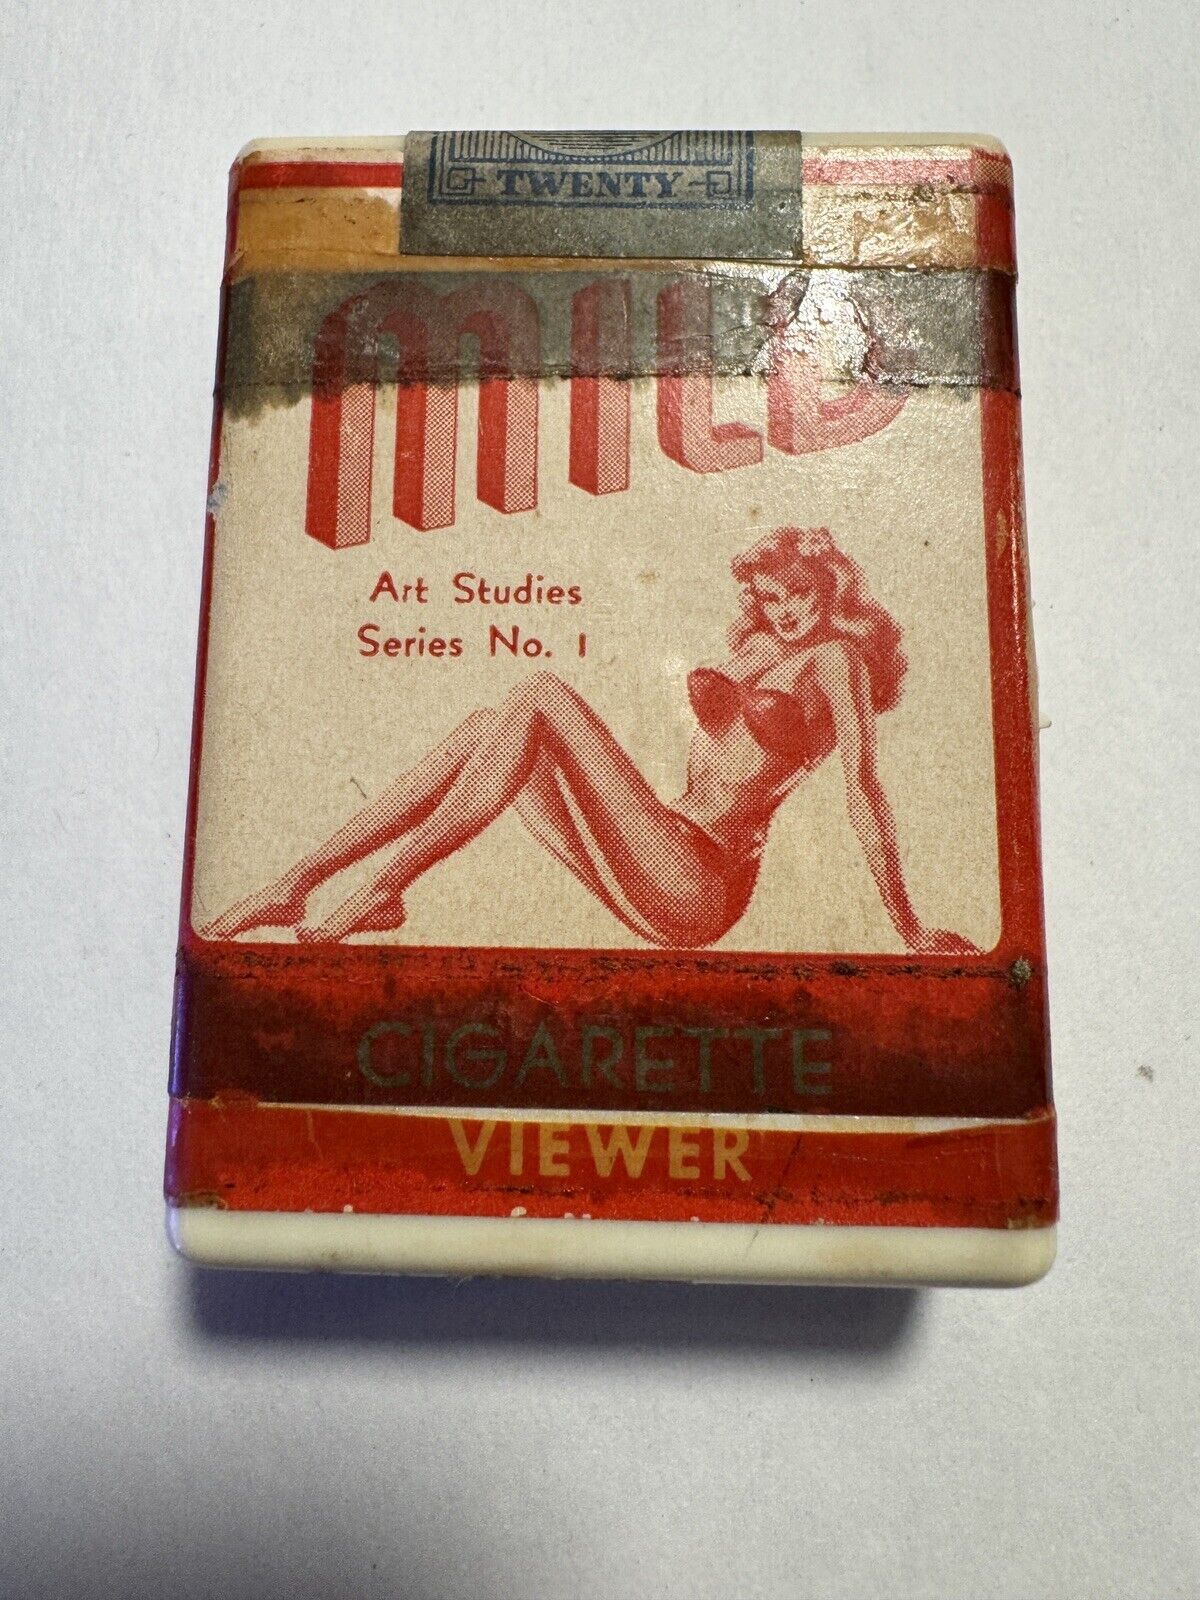 1950s MILD CIGARETTE VIEWER Art Studies Series No. 1 - 20 Pics of Pin Up Girly